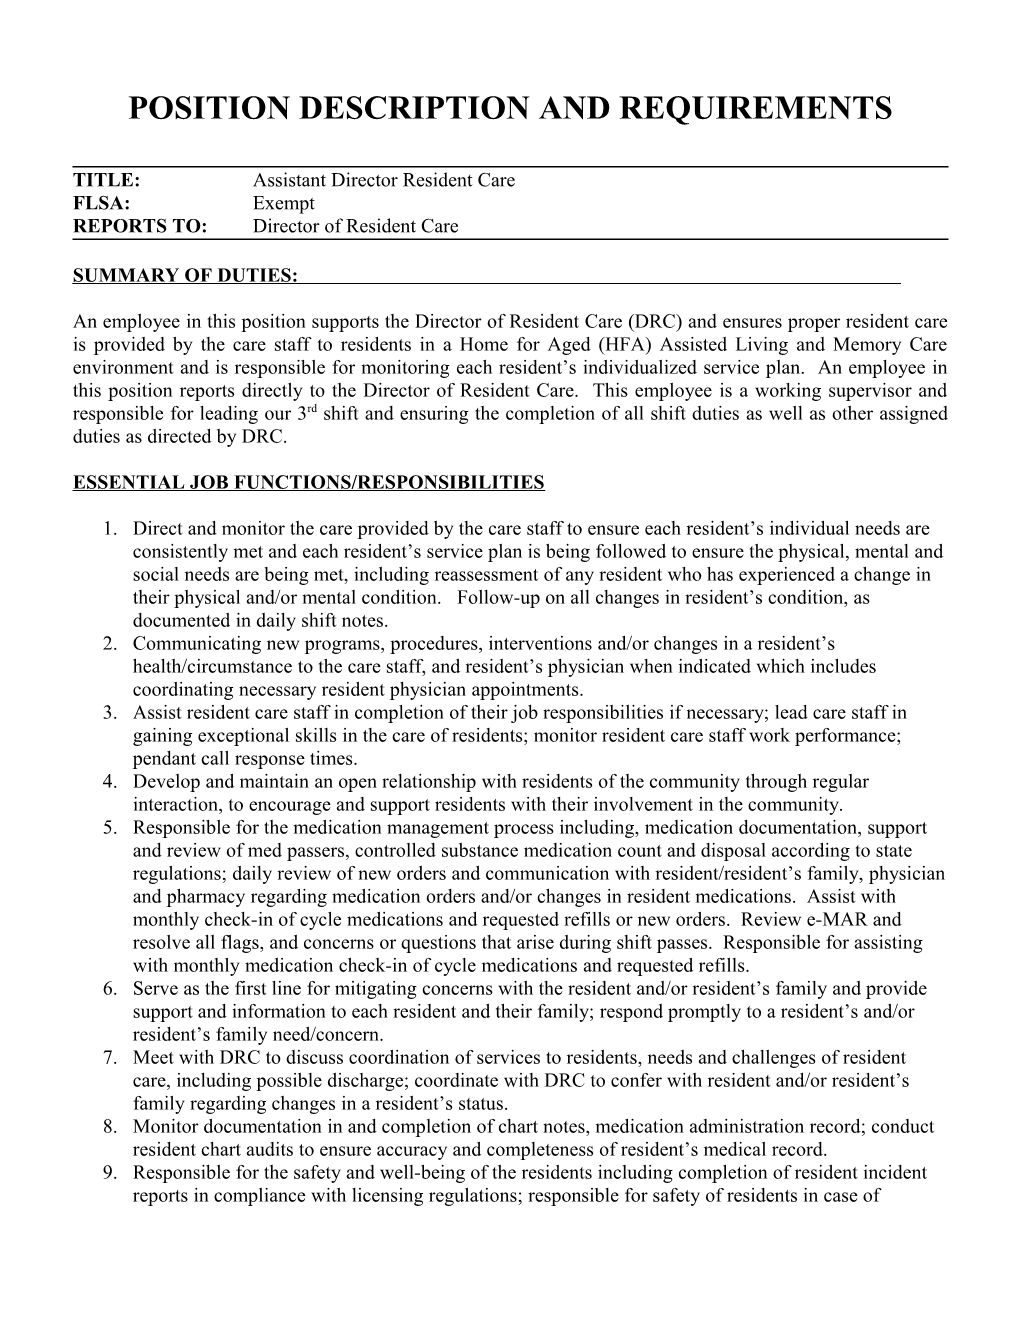 Position Description and Requirements